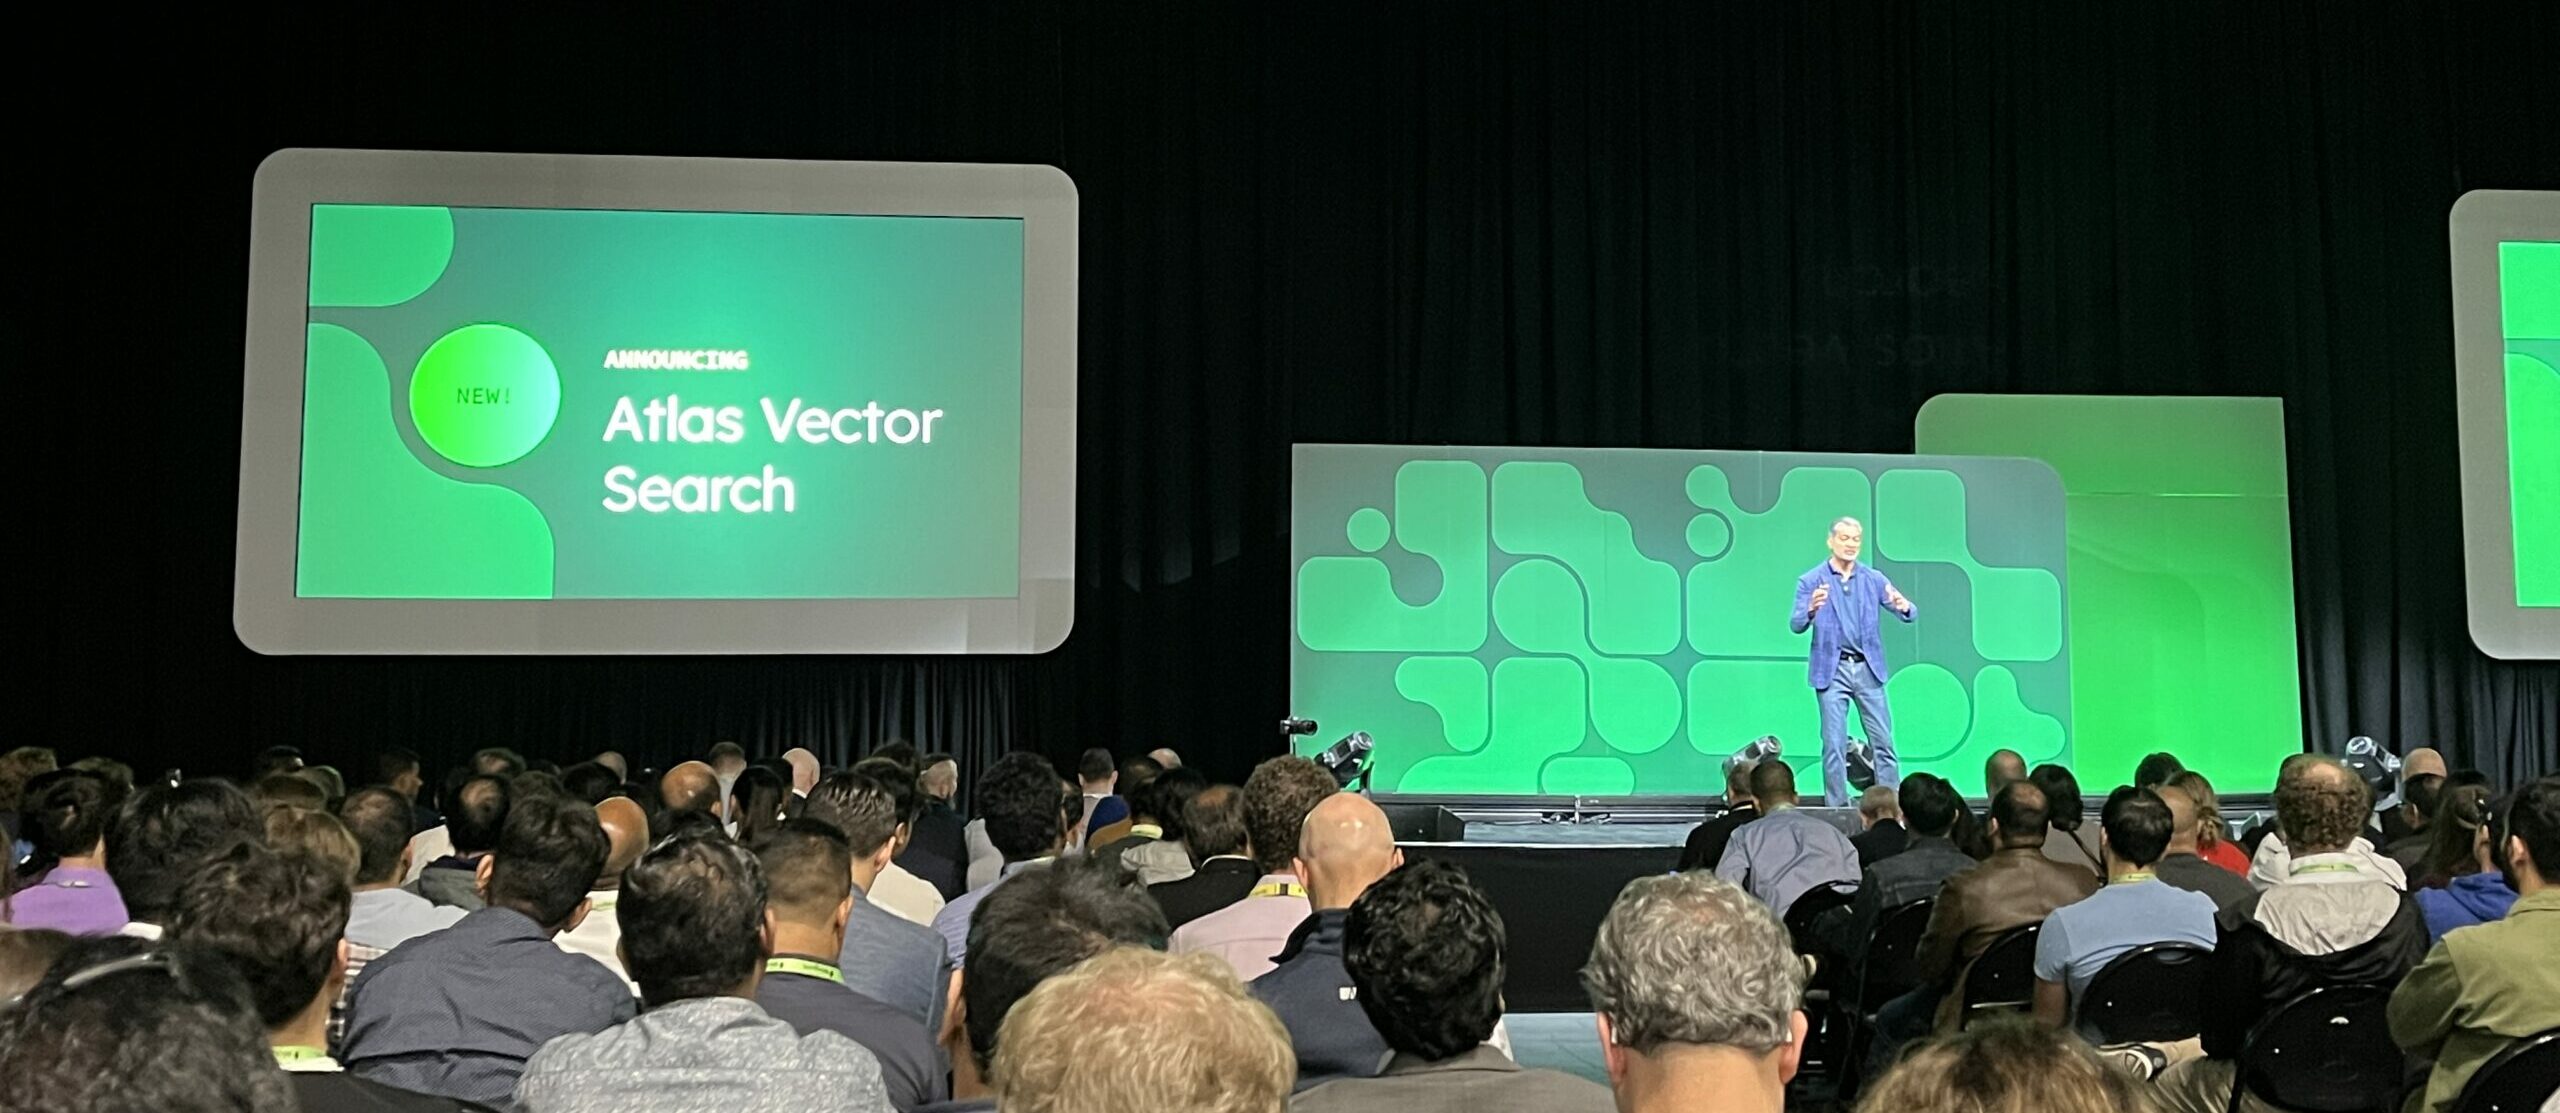 MongoDB CEO Dev Ittycheria announces vector search